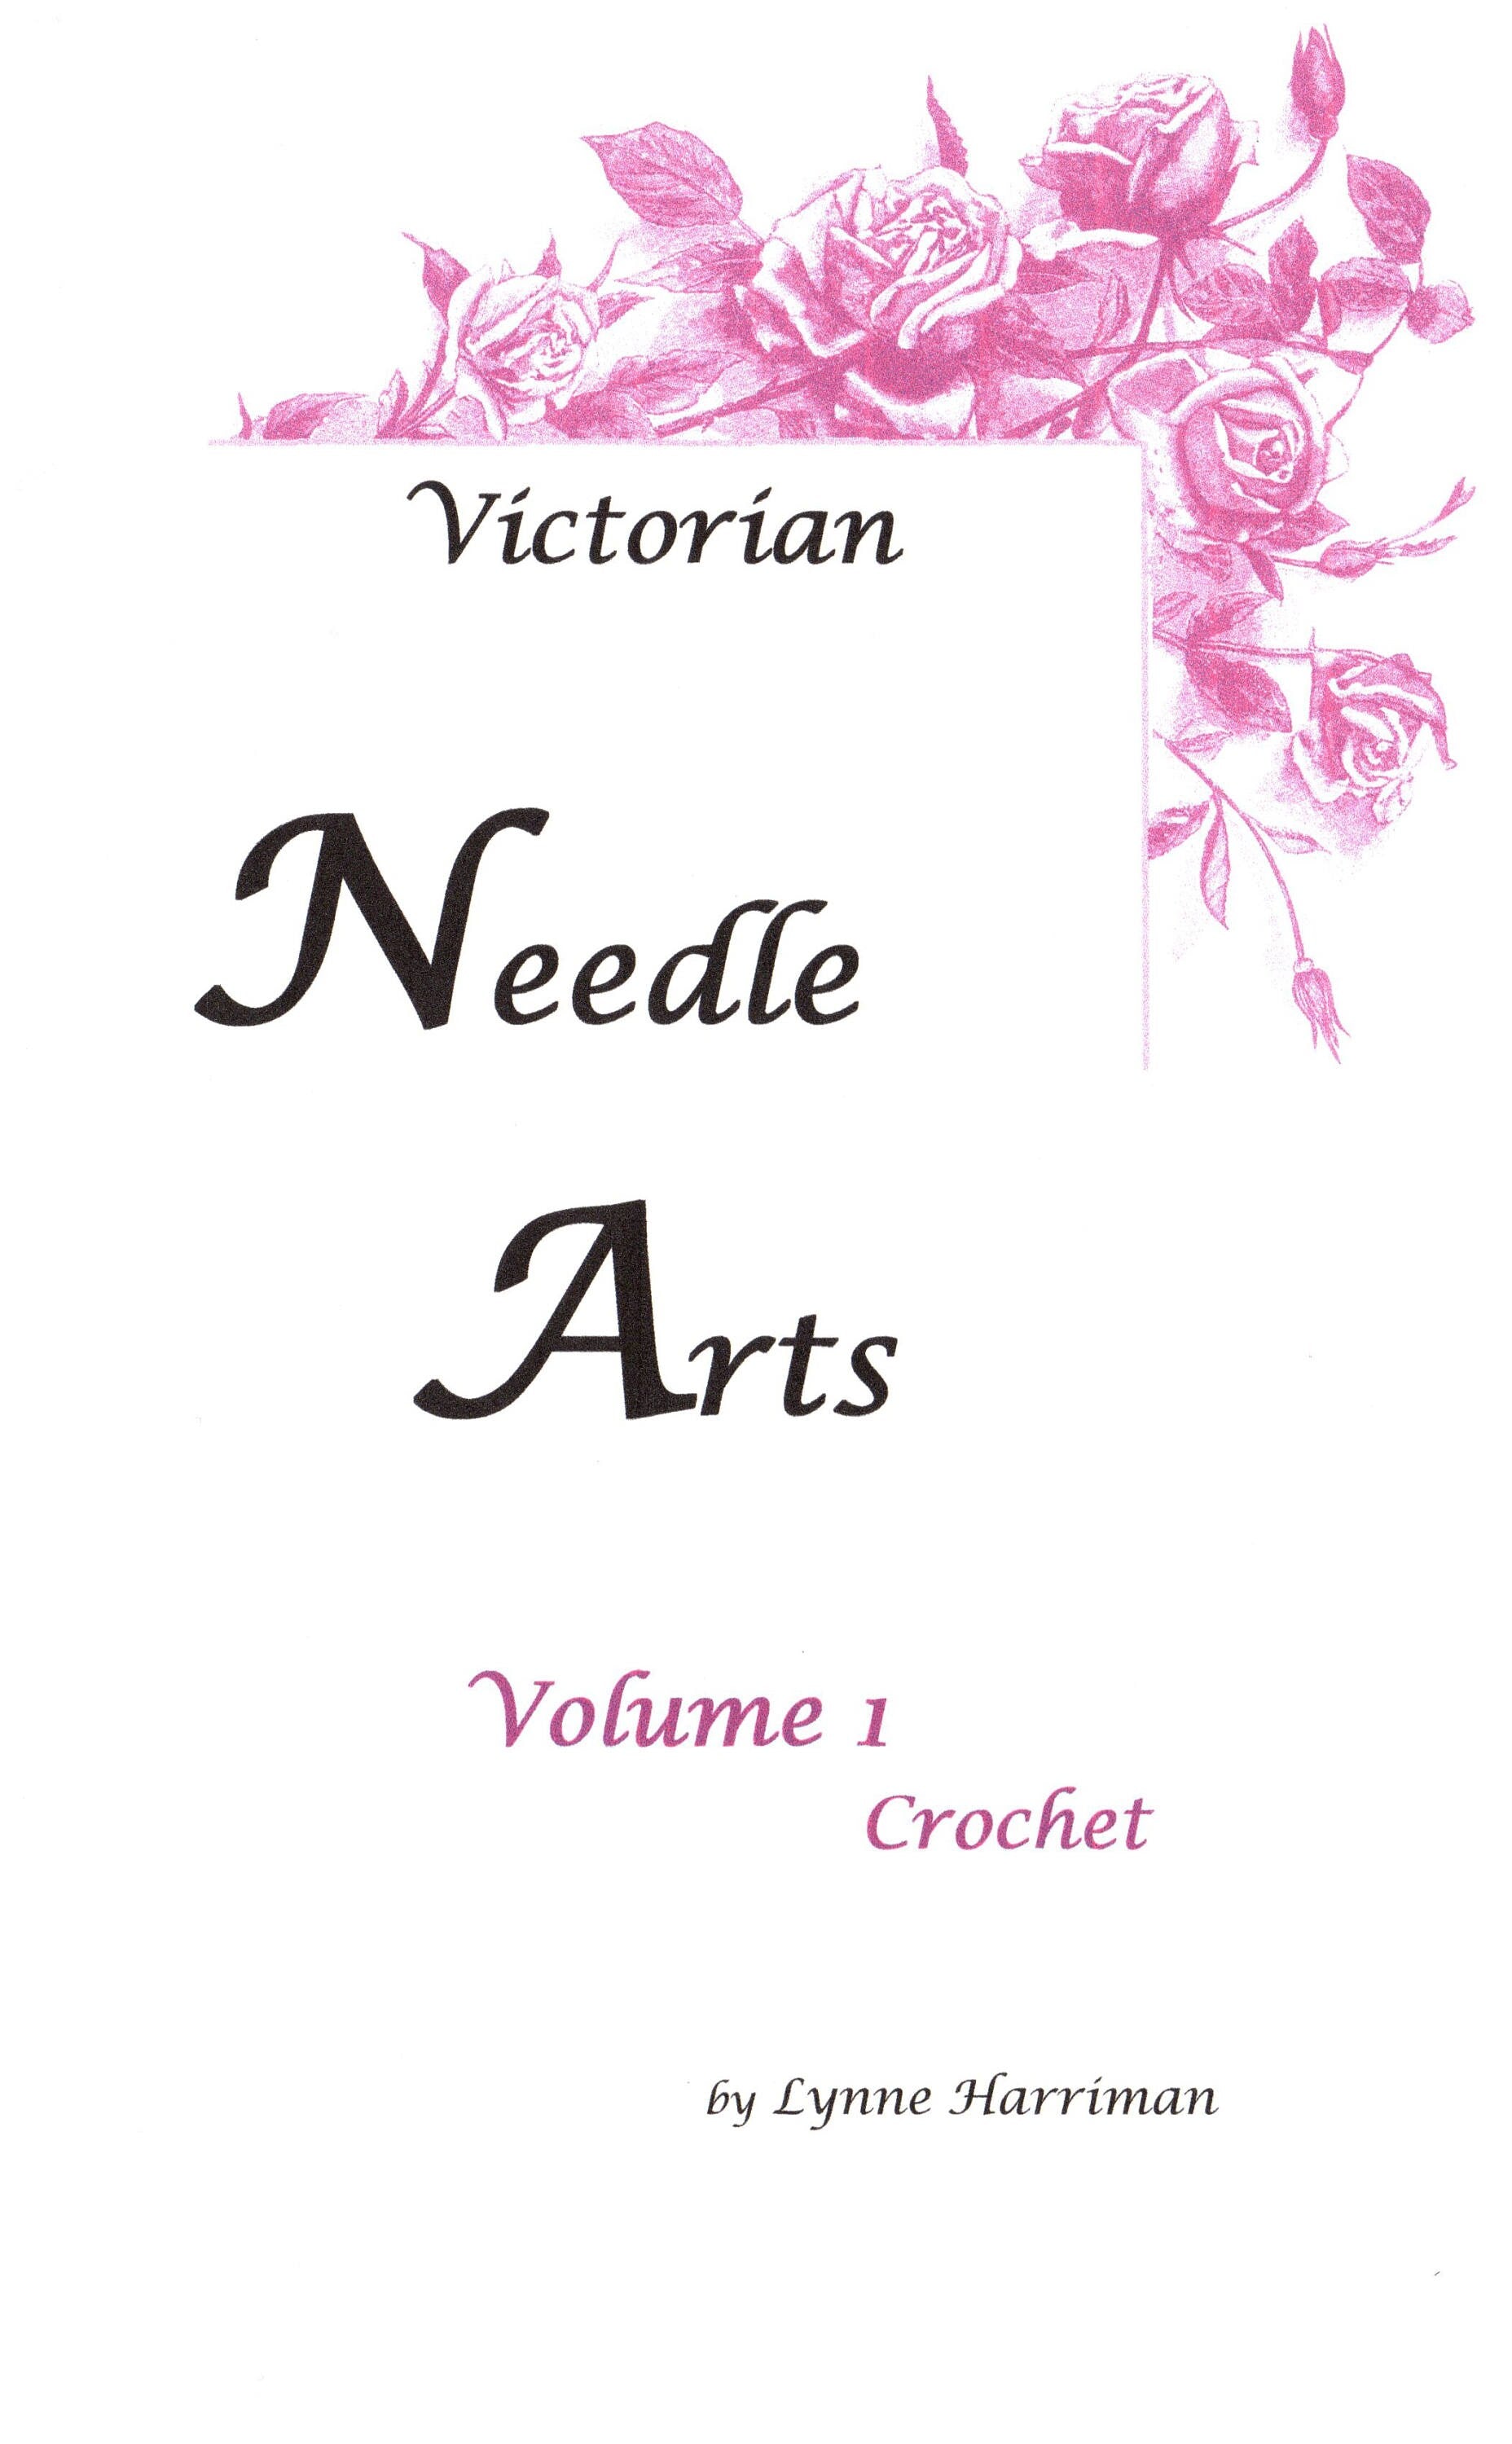 Needle Arts Volume I - Crochet - Pattern Booklet